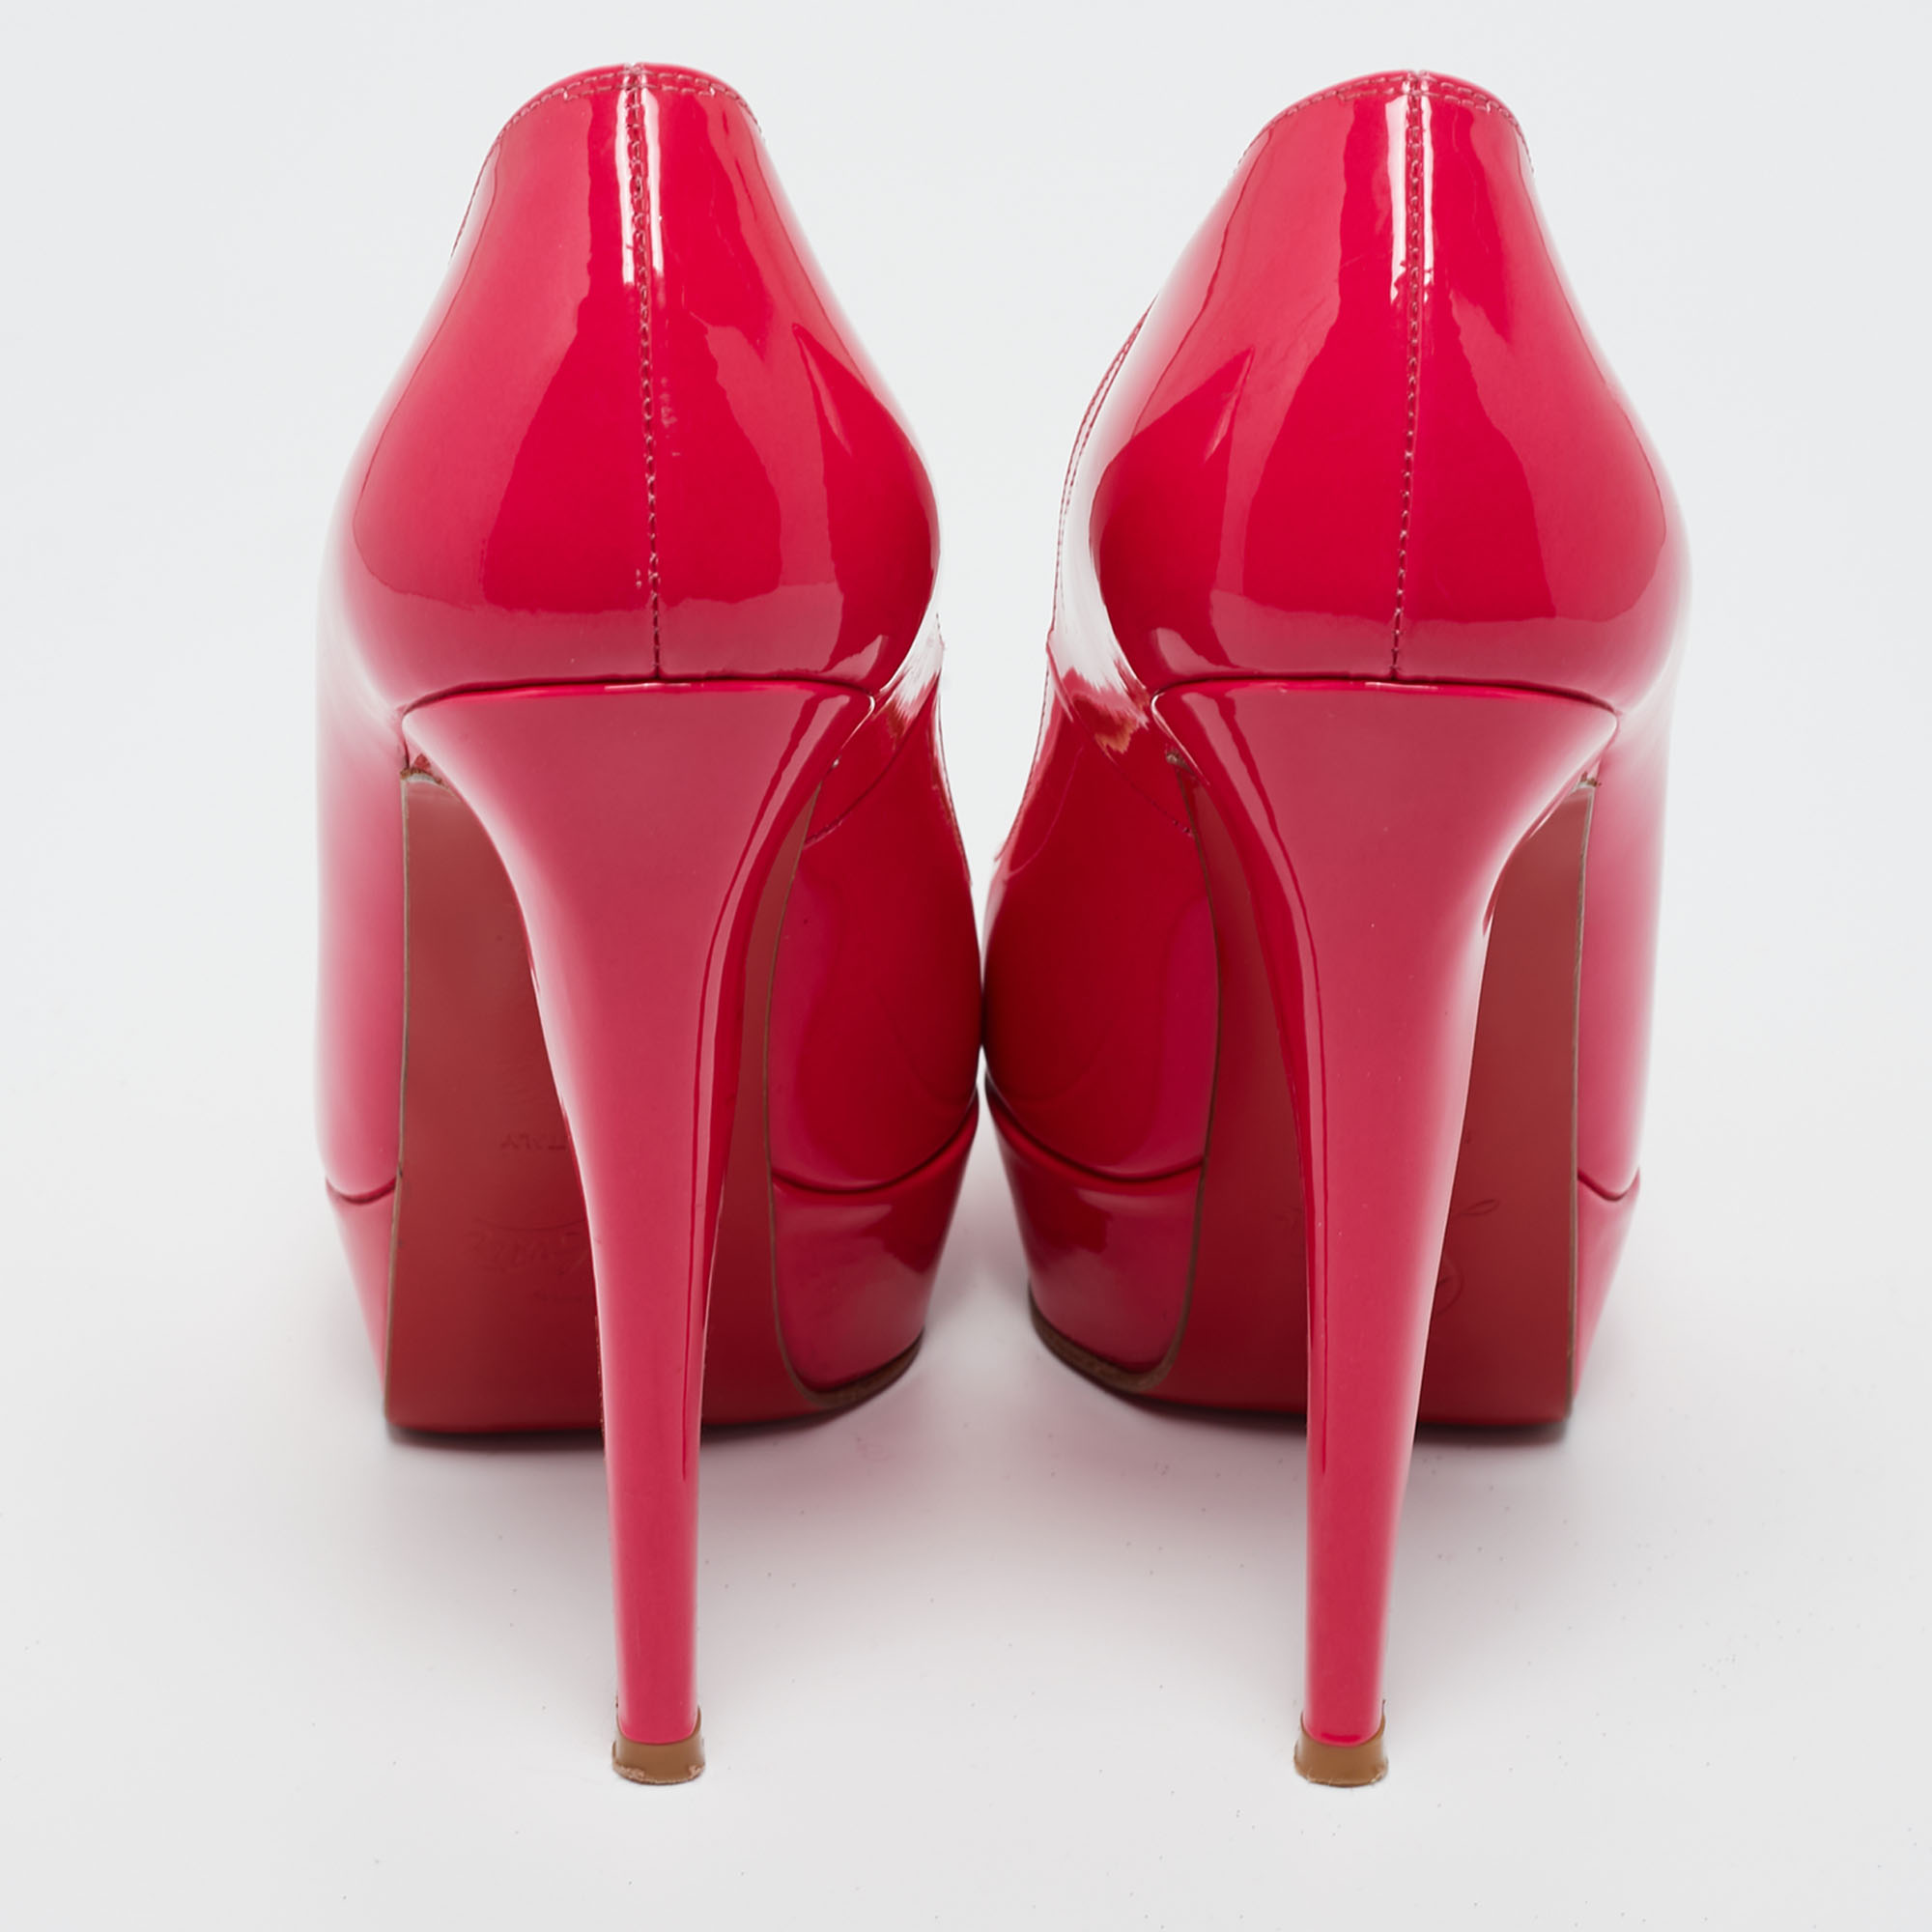 Christian Louboutin Neon Pink Patent Leather Bianca Pumps Size 36